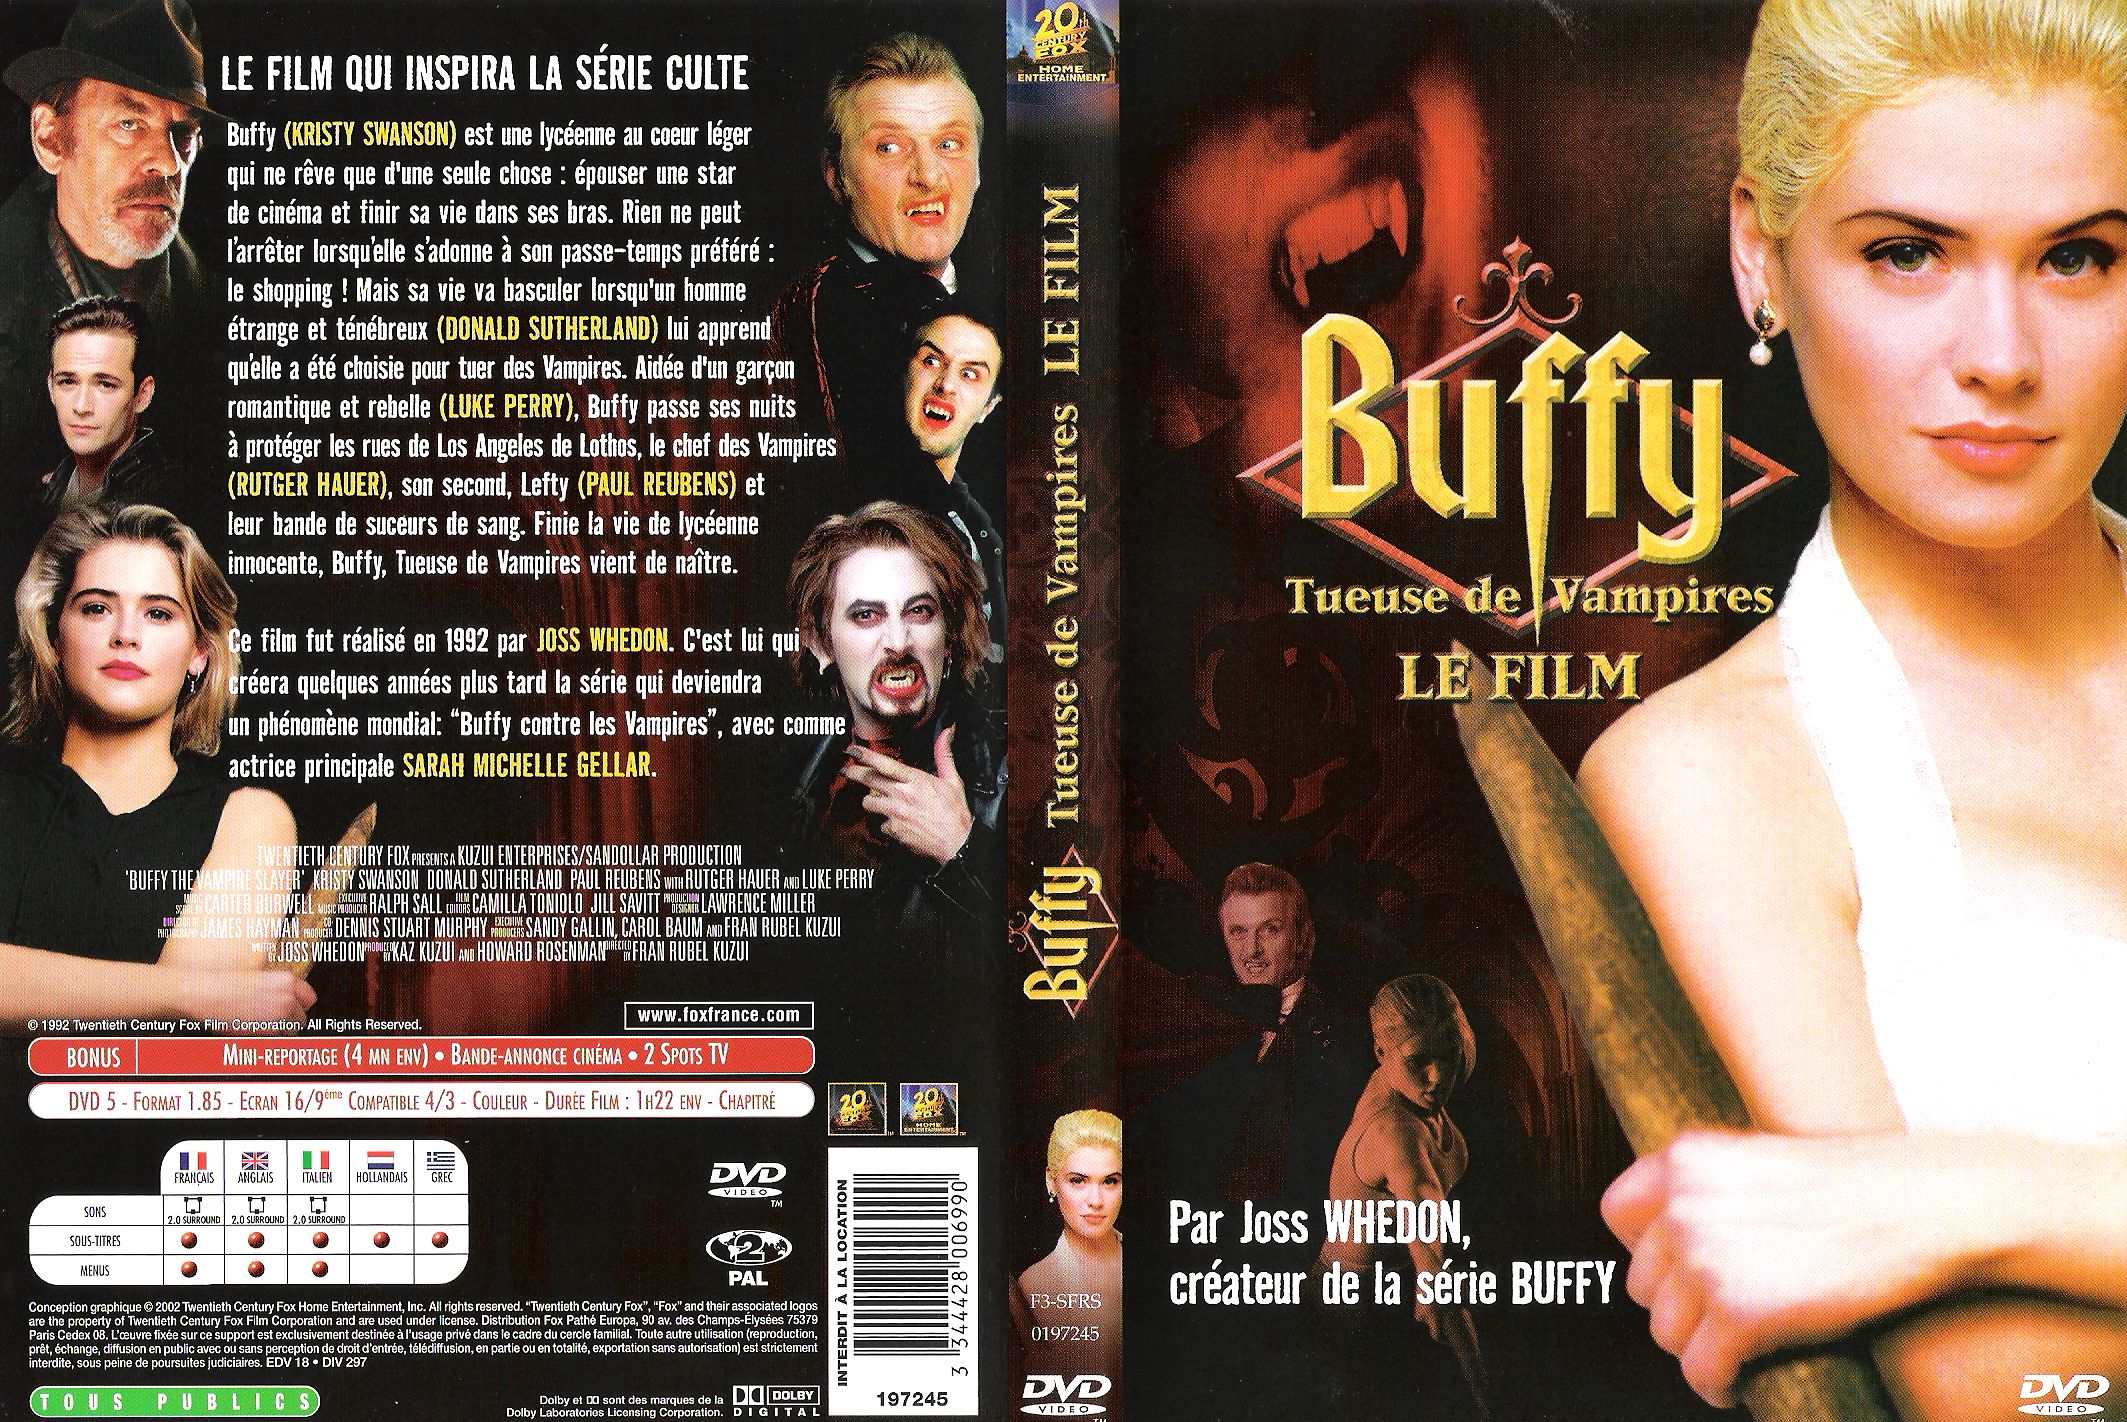 Jaquette DVD Buffy tueuse de vampires v2